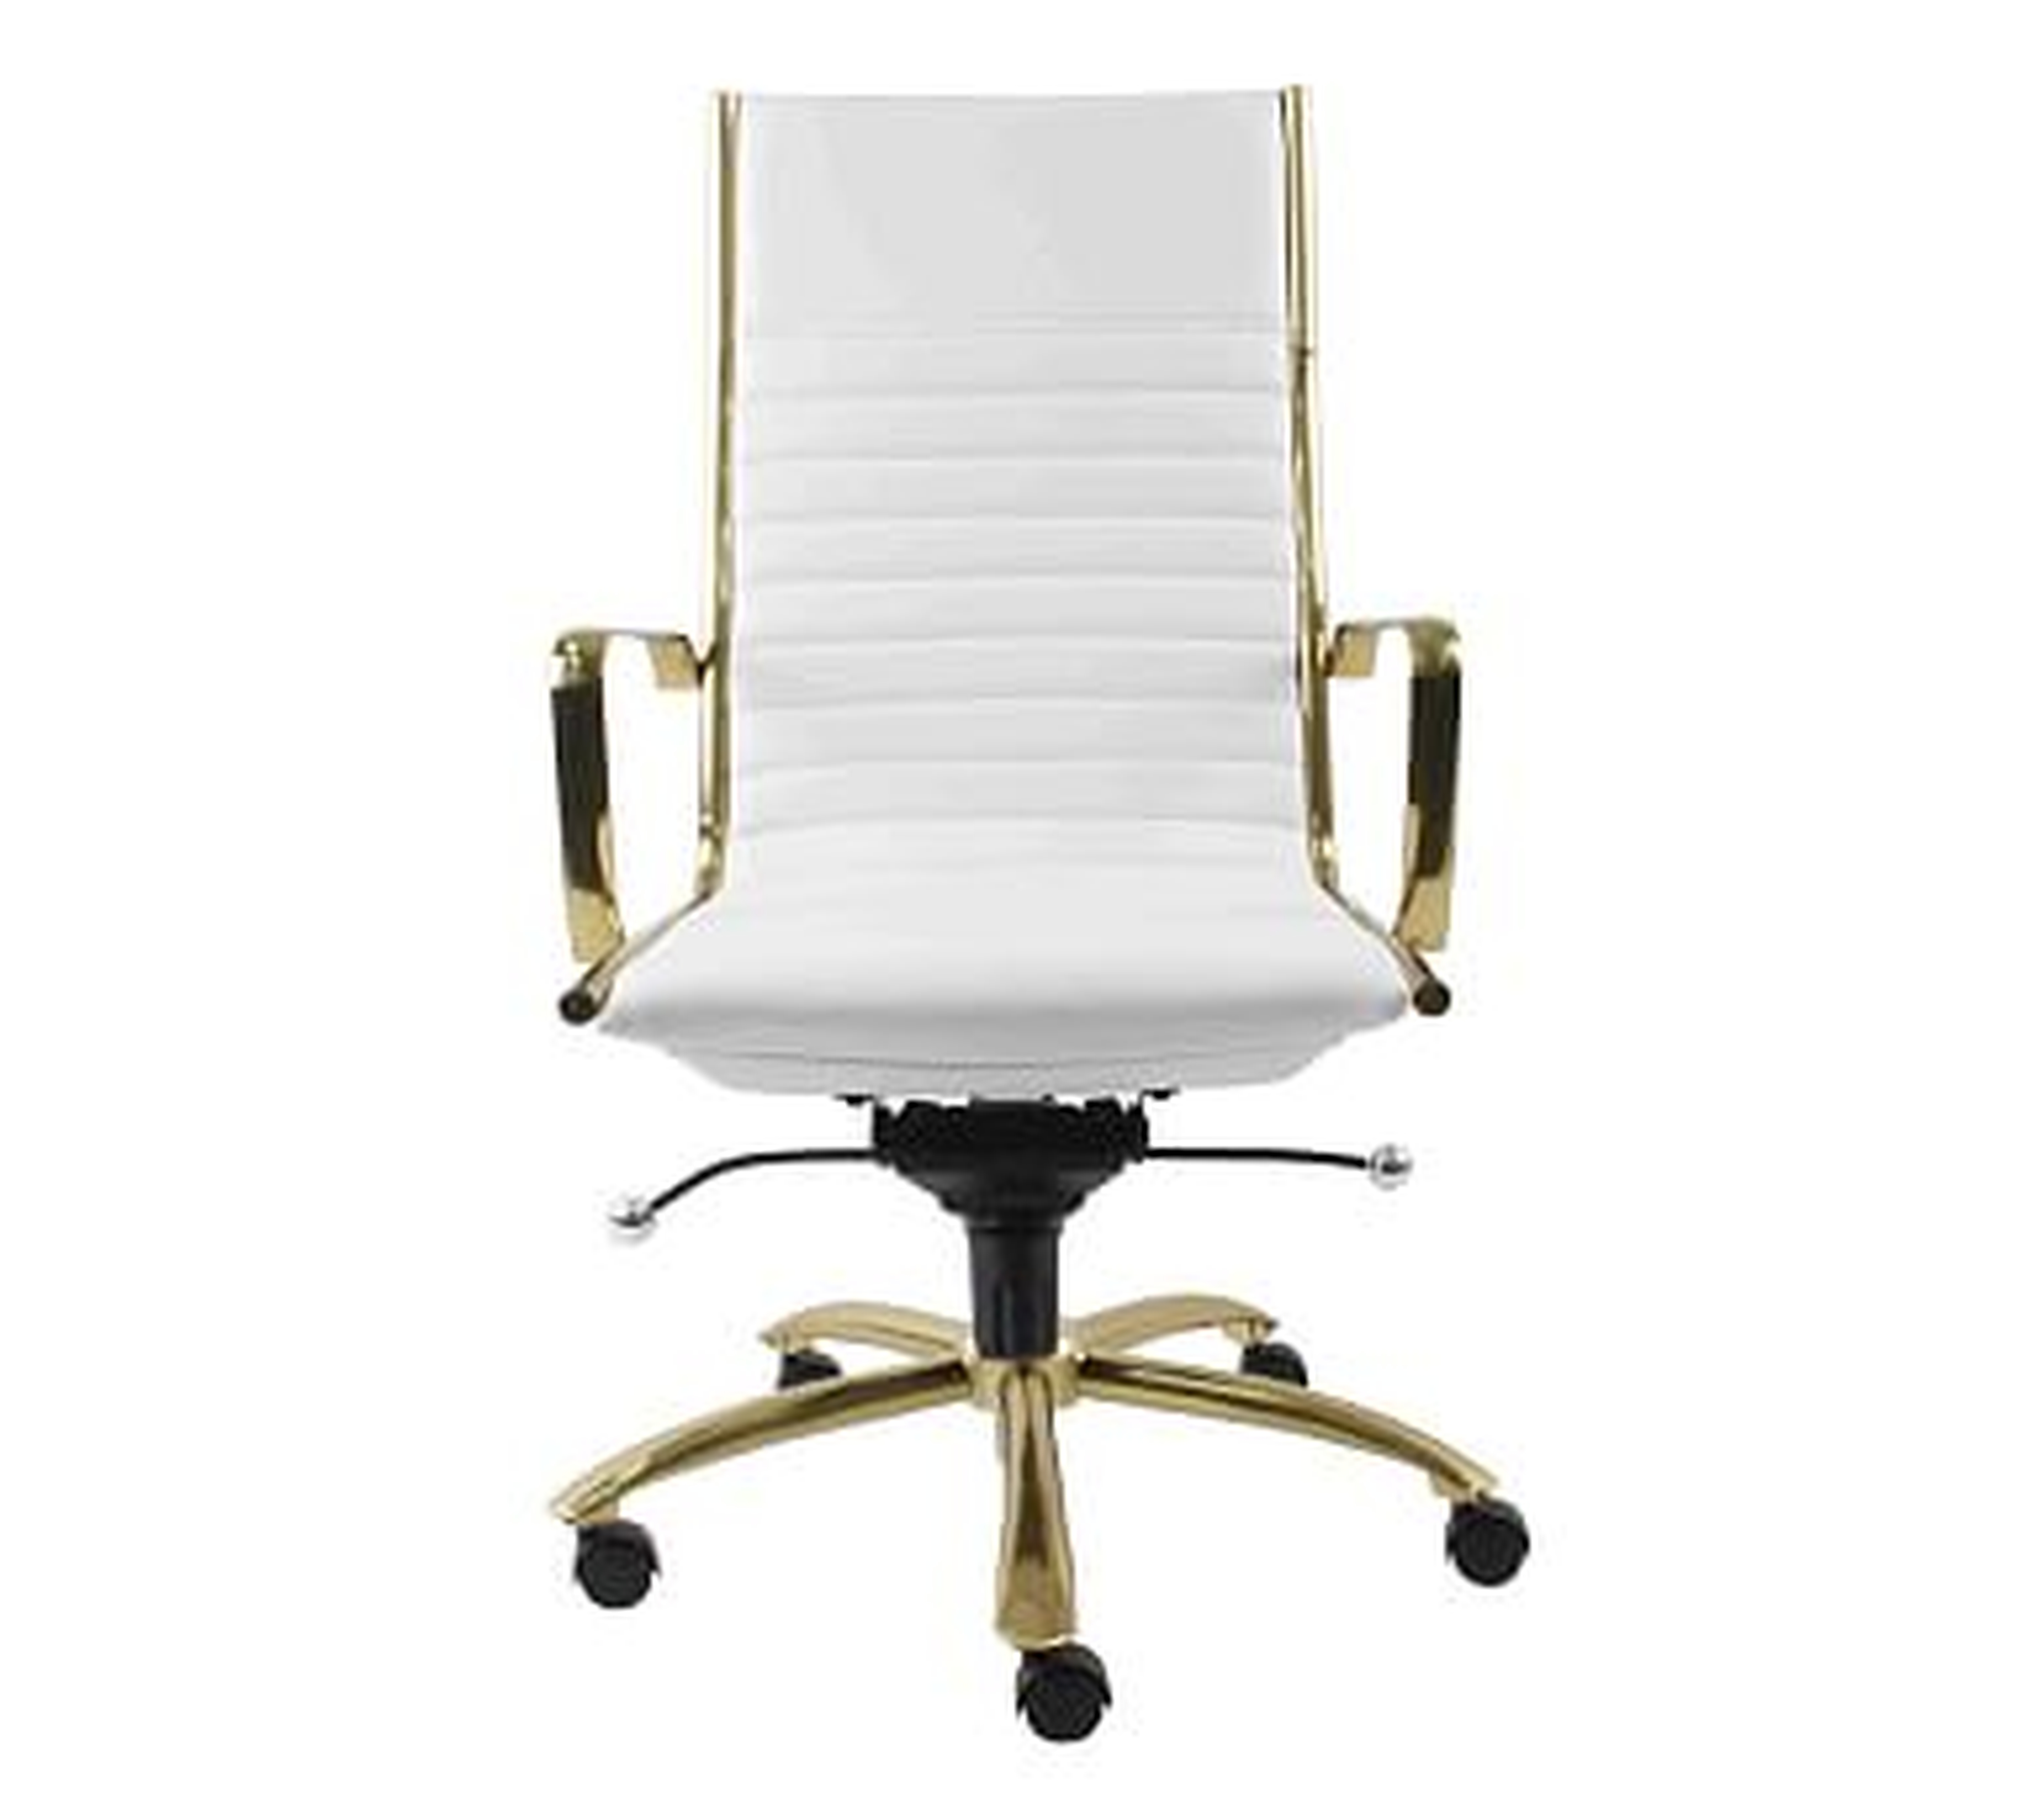 Fowler High Back Desk Chair, White/Gold - Pottery Barn